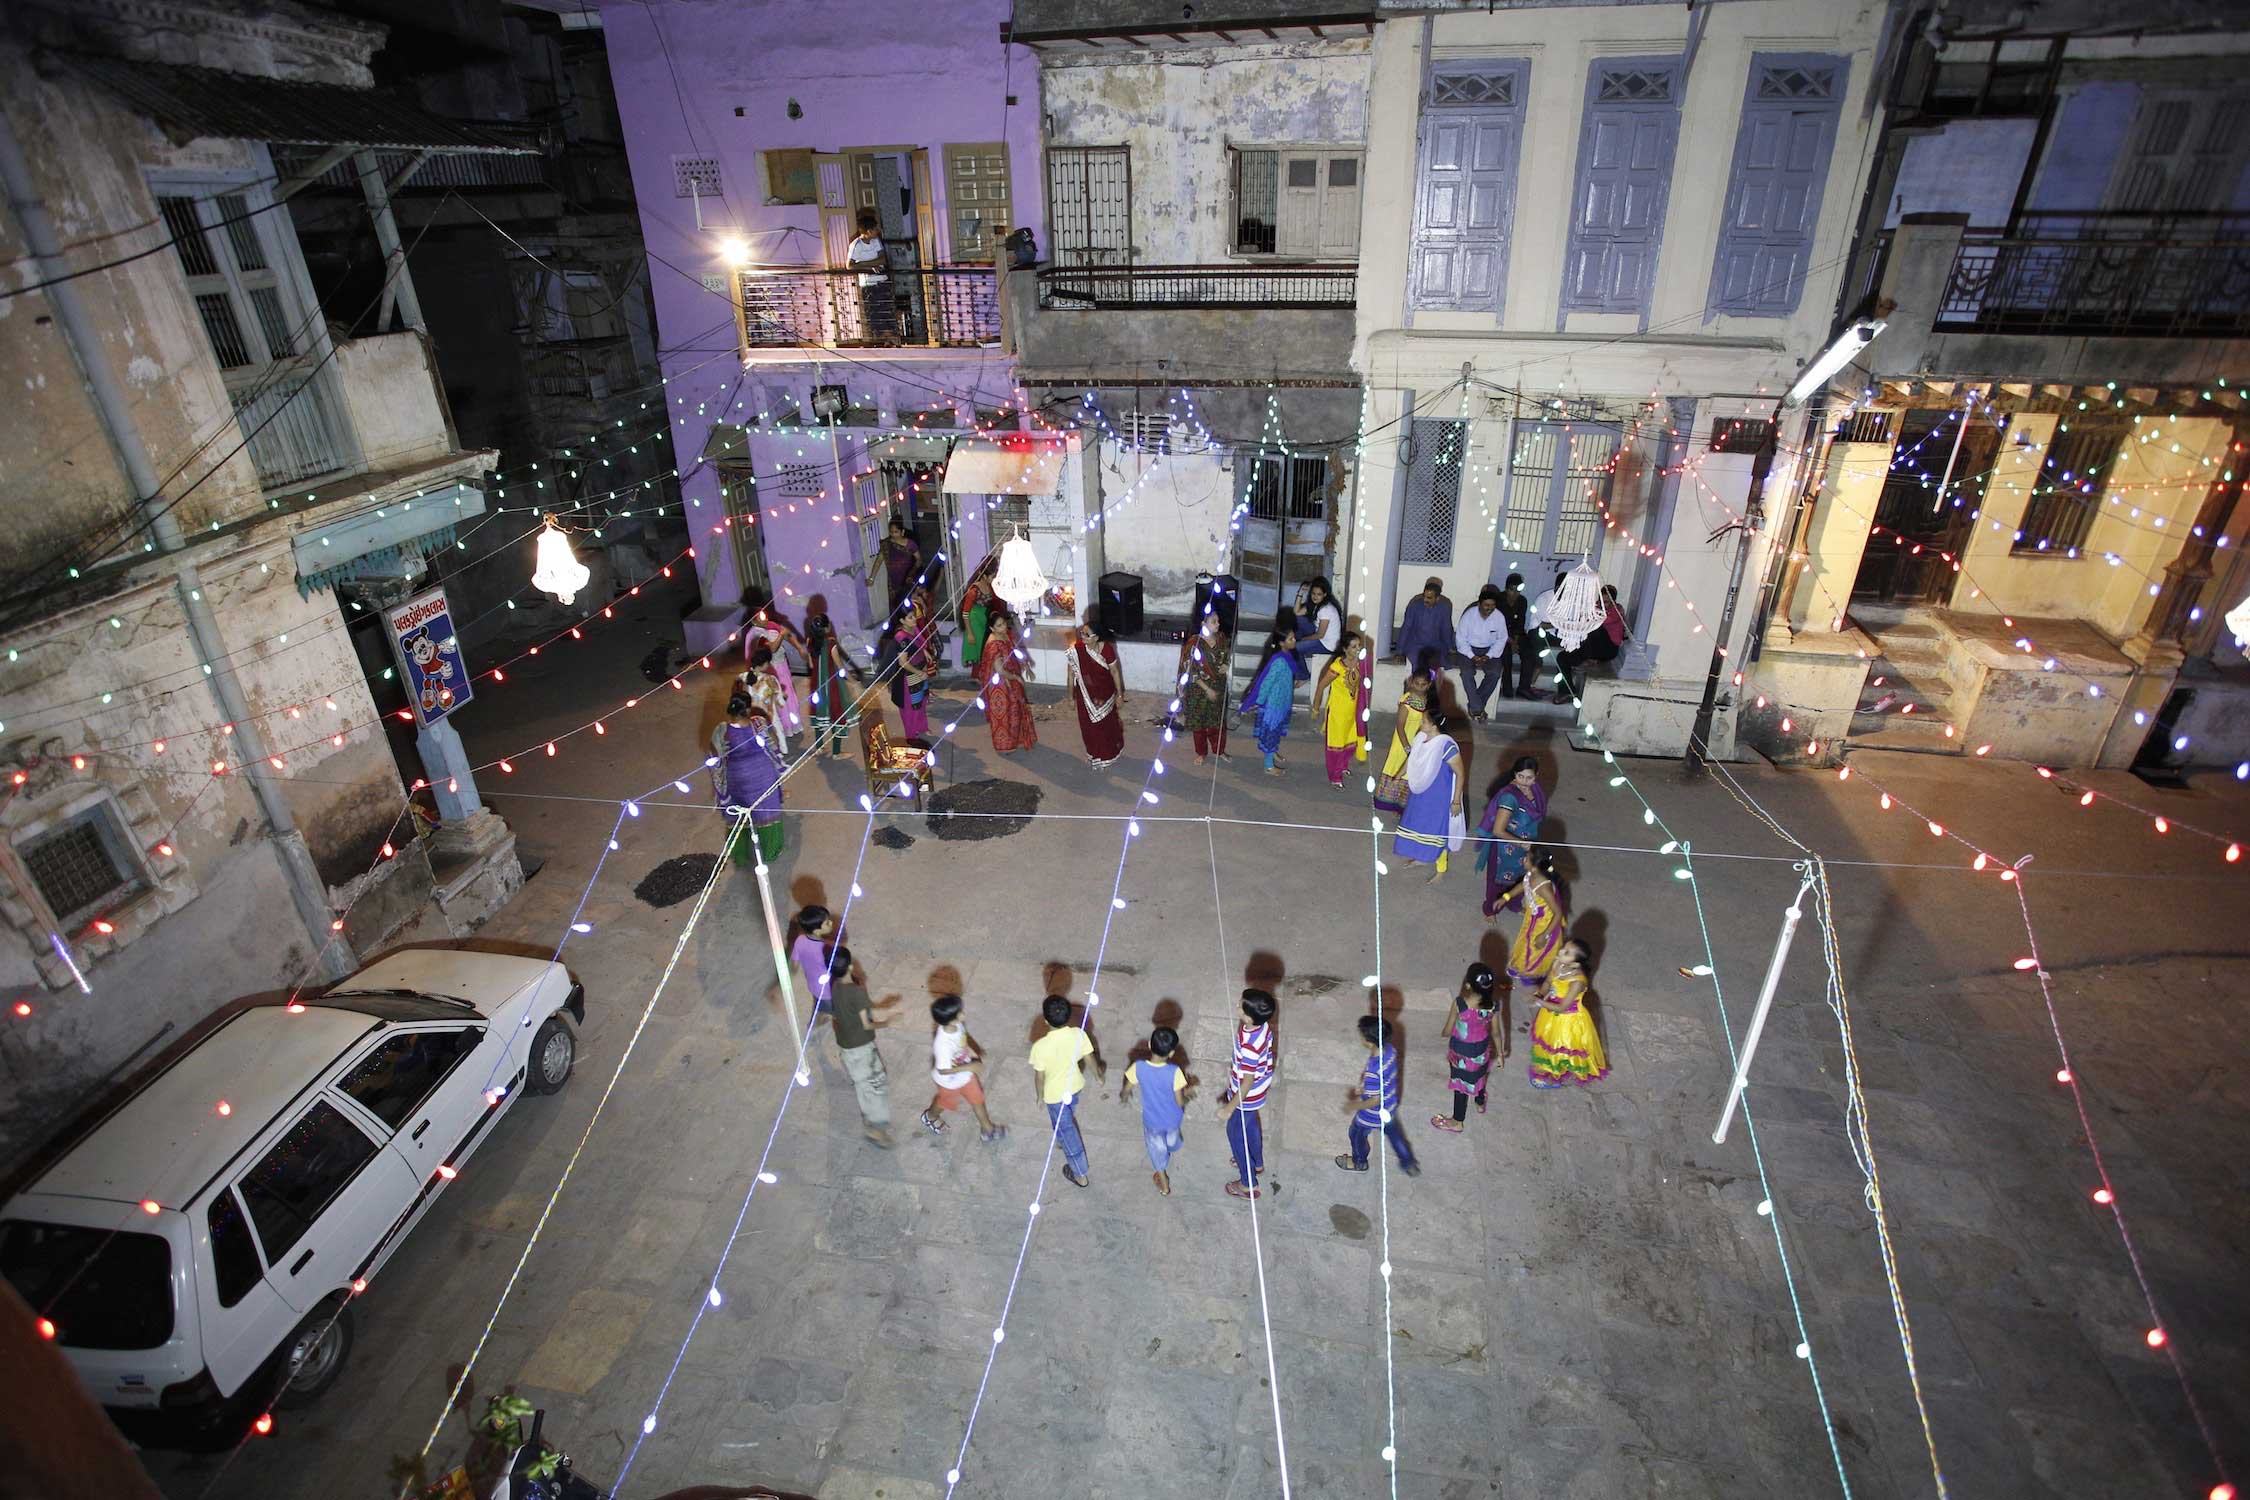 A “pol” community dances in their courtyard.